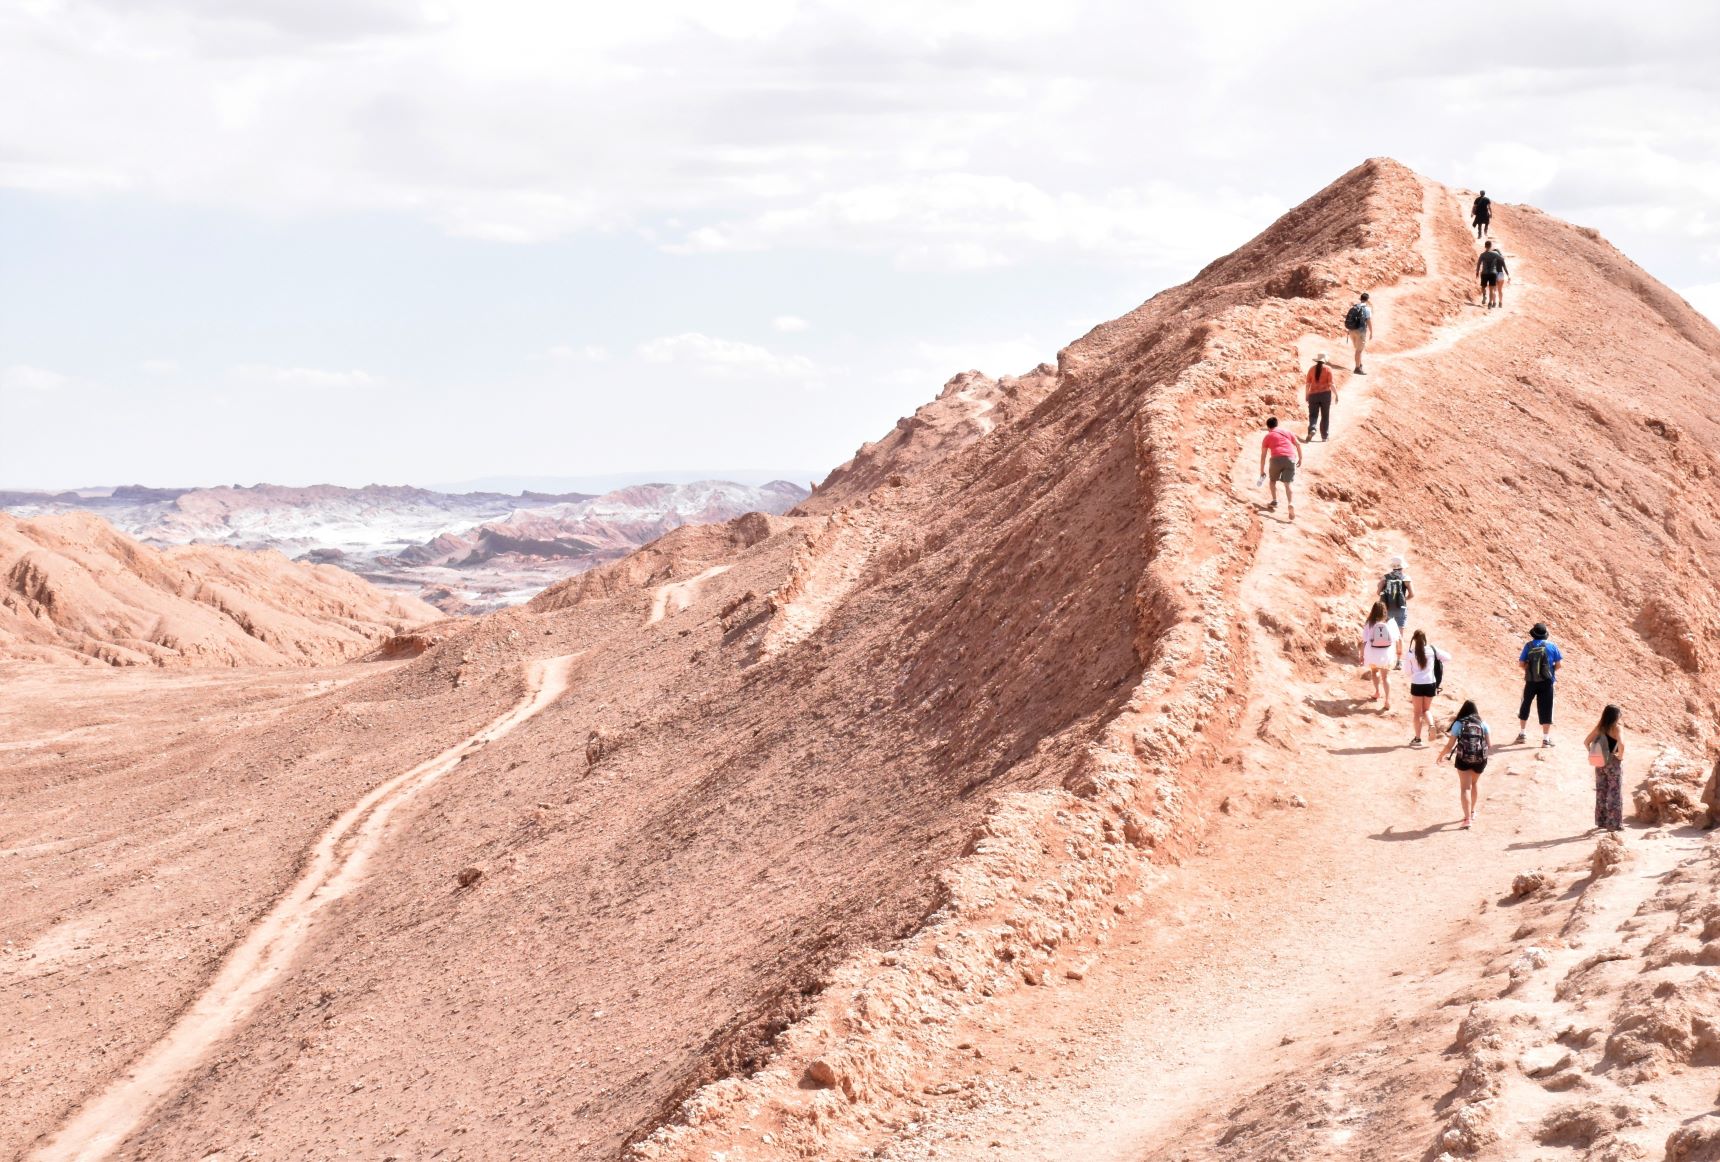 Hiking in the Atacama Desert